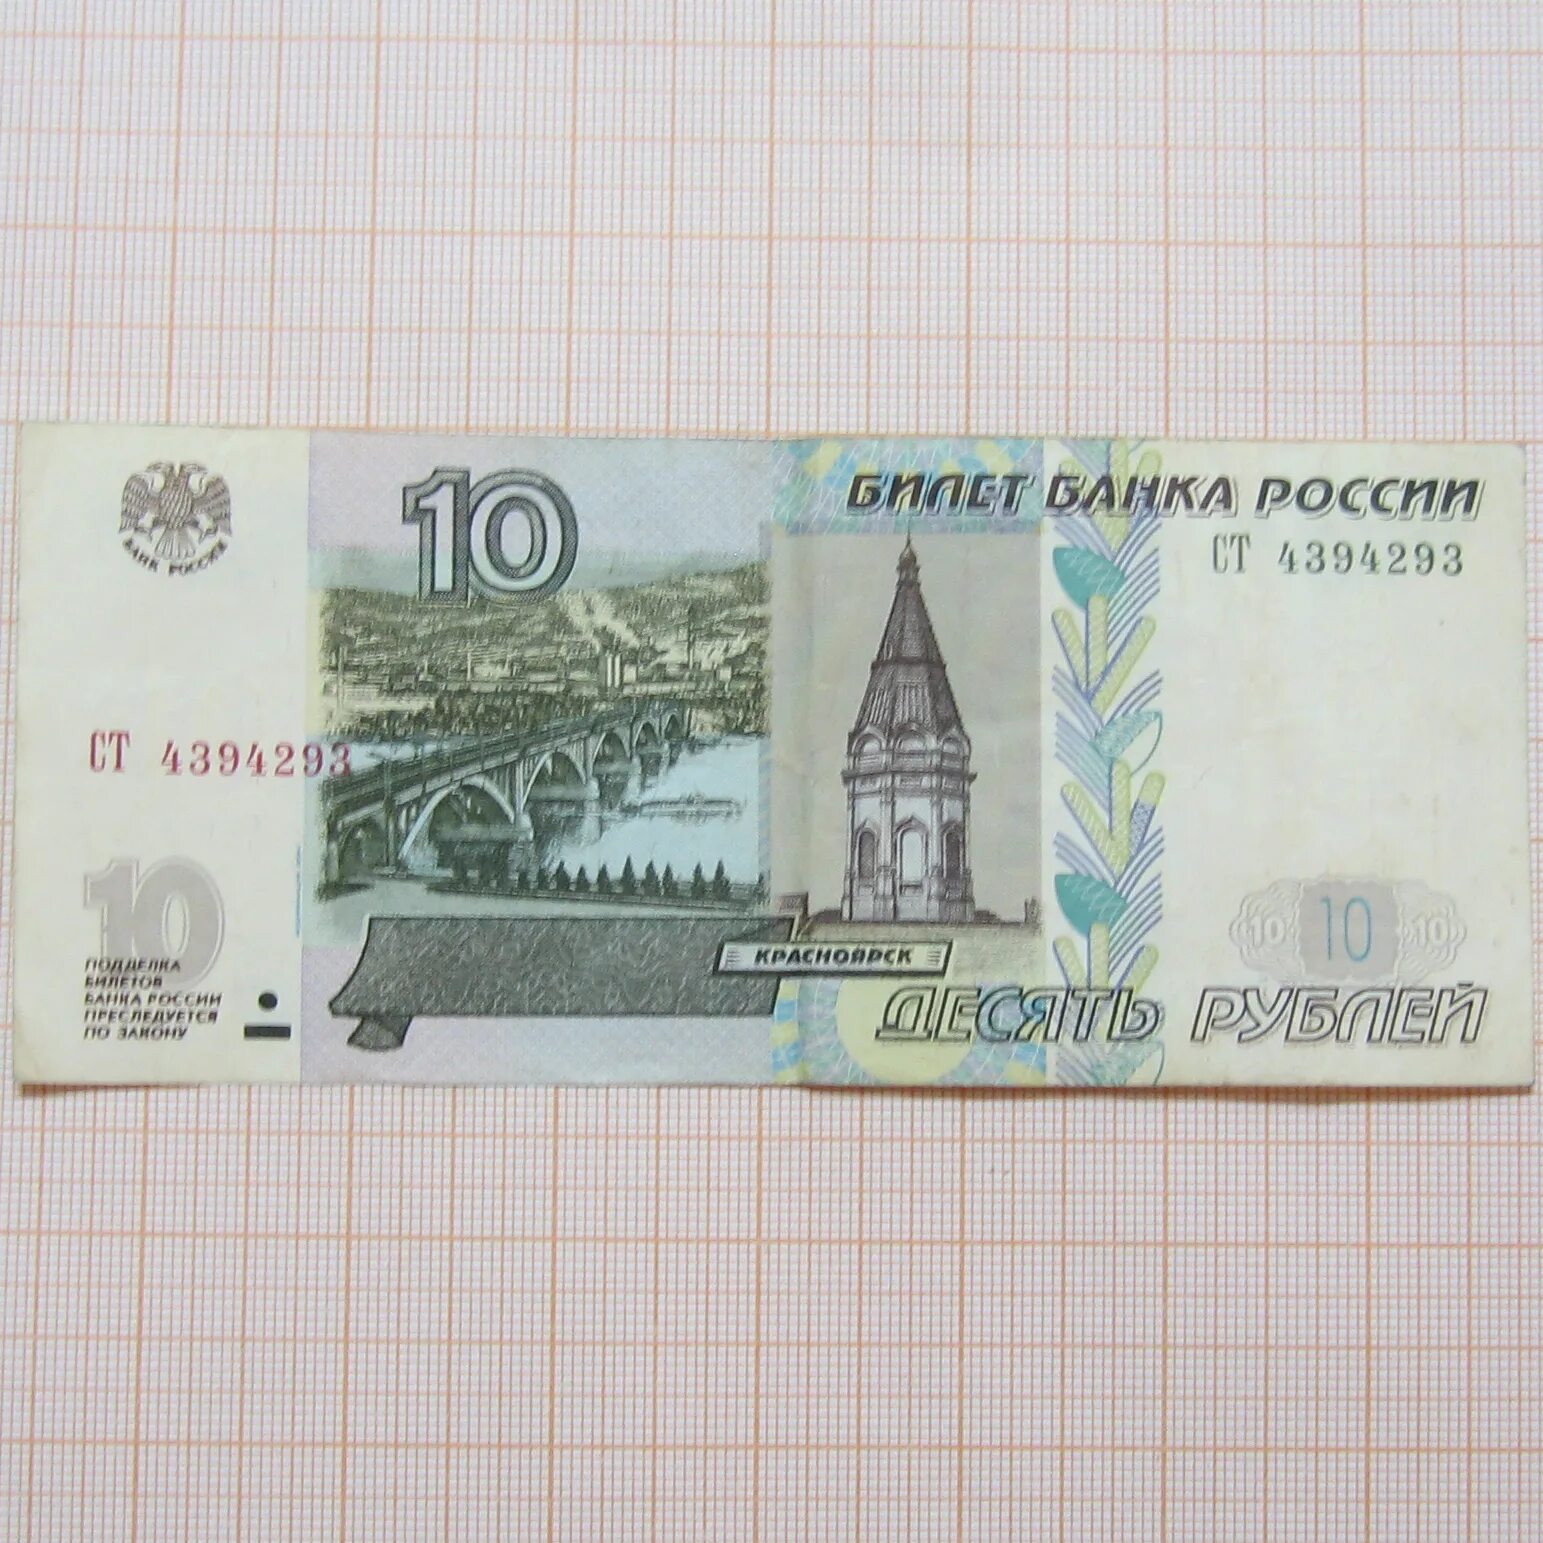 1000 рублей 2004. 1000 Рублей 1997 (модификация 2004 года) UNC. 10 Рублей 1997 модификация 2004. 1000 Рублей 2004 года модификации. Модификация 2004 10 рублей.